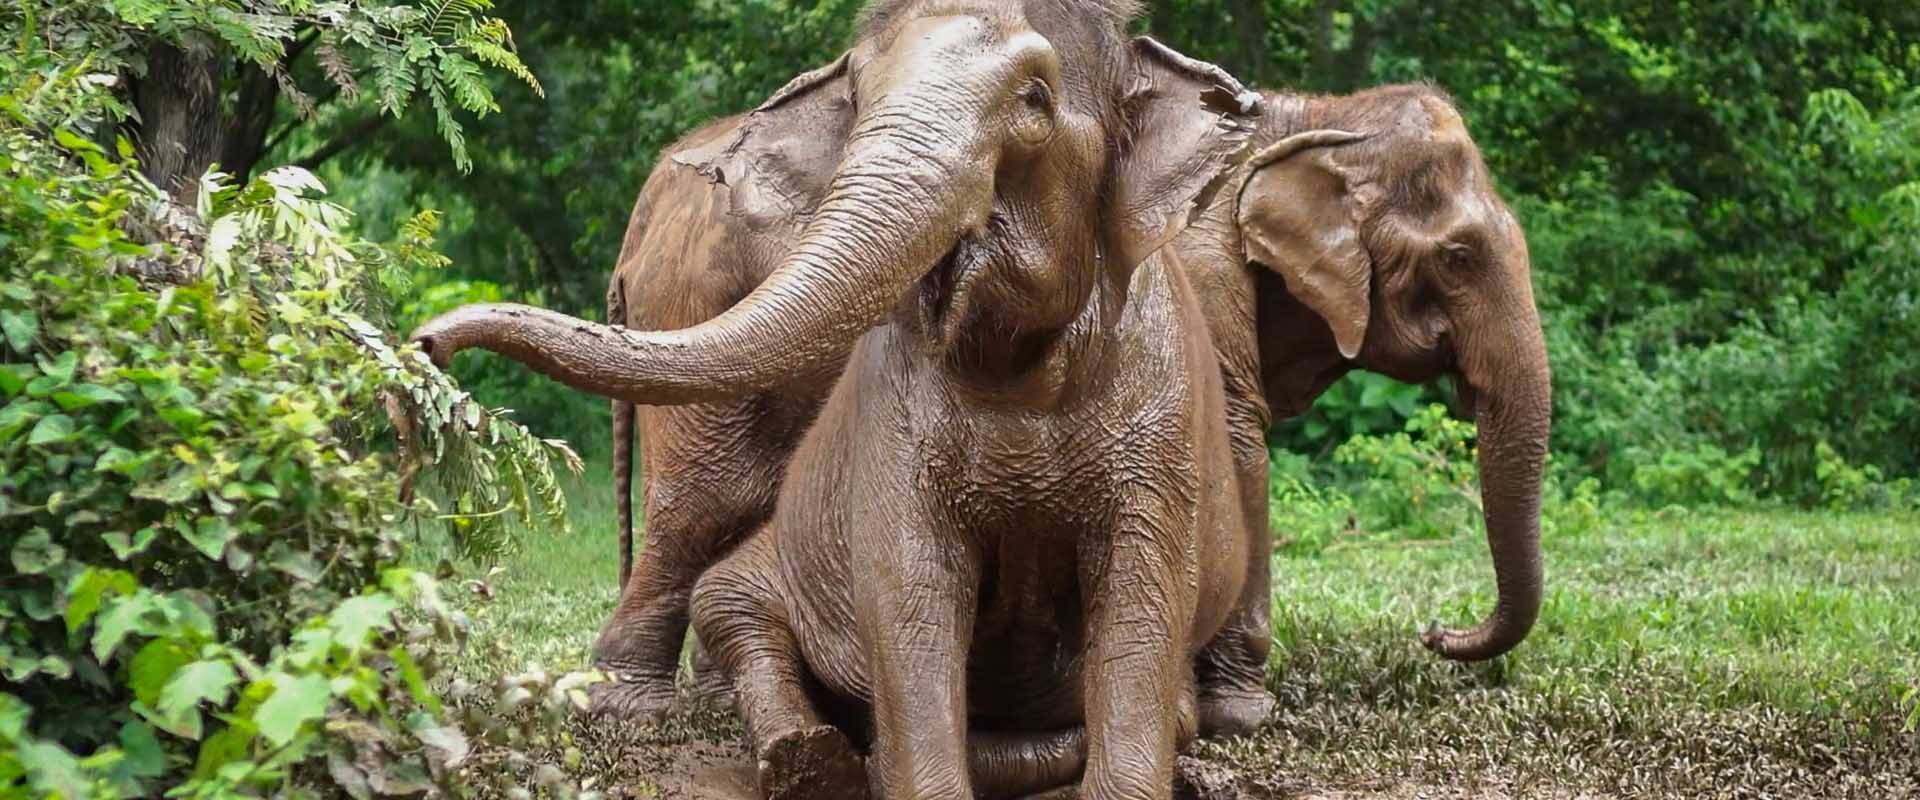 Care for Elephants